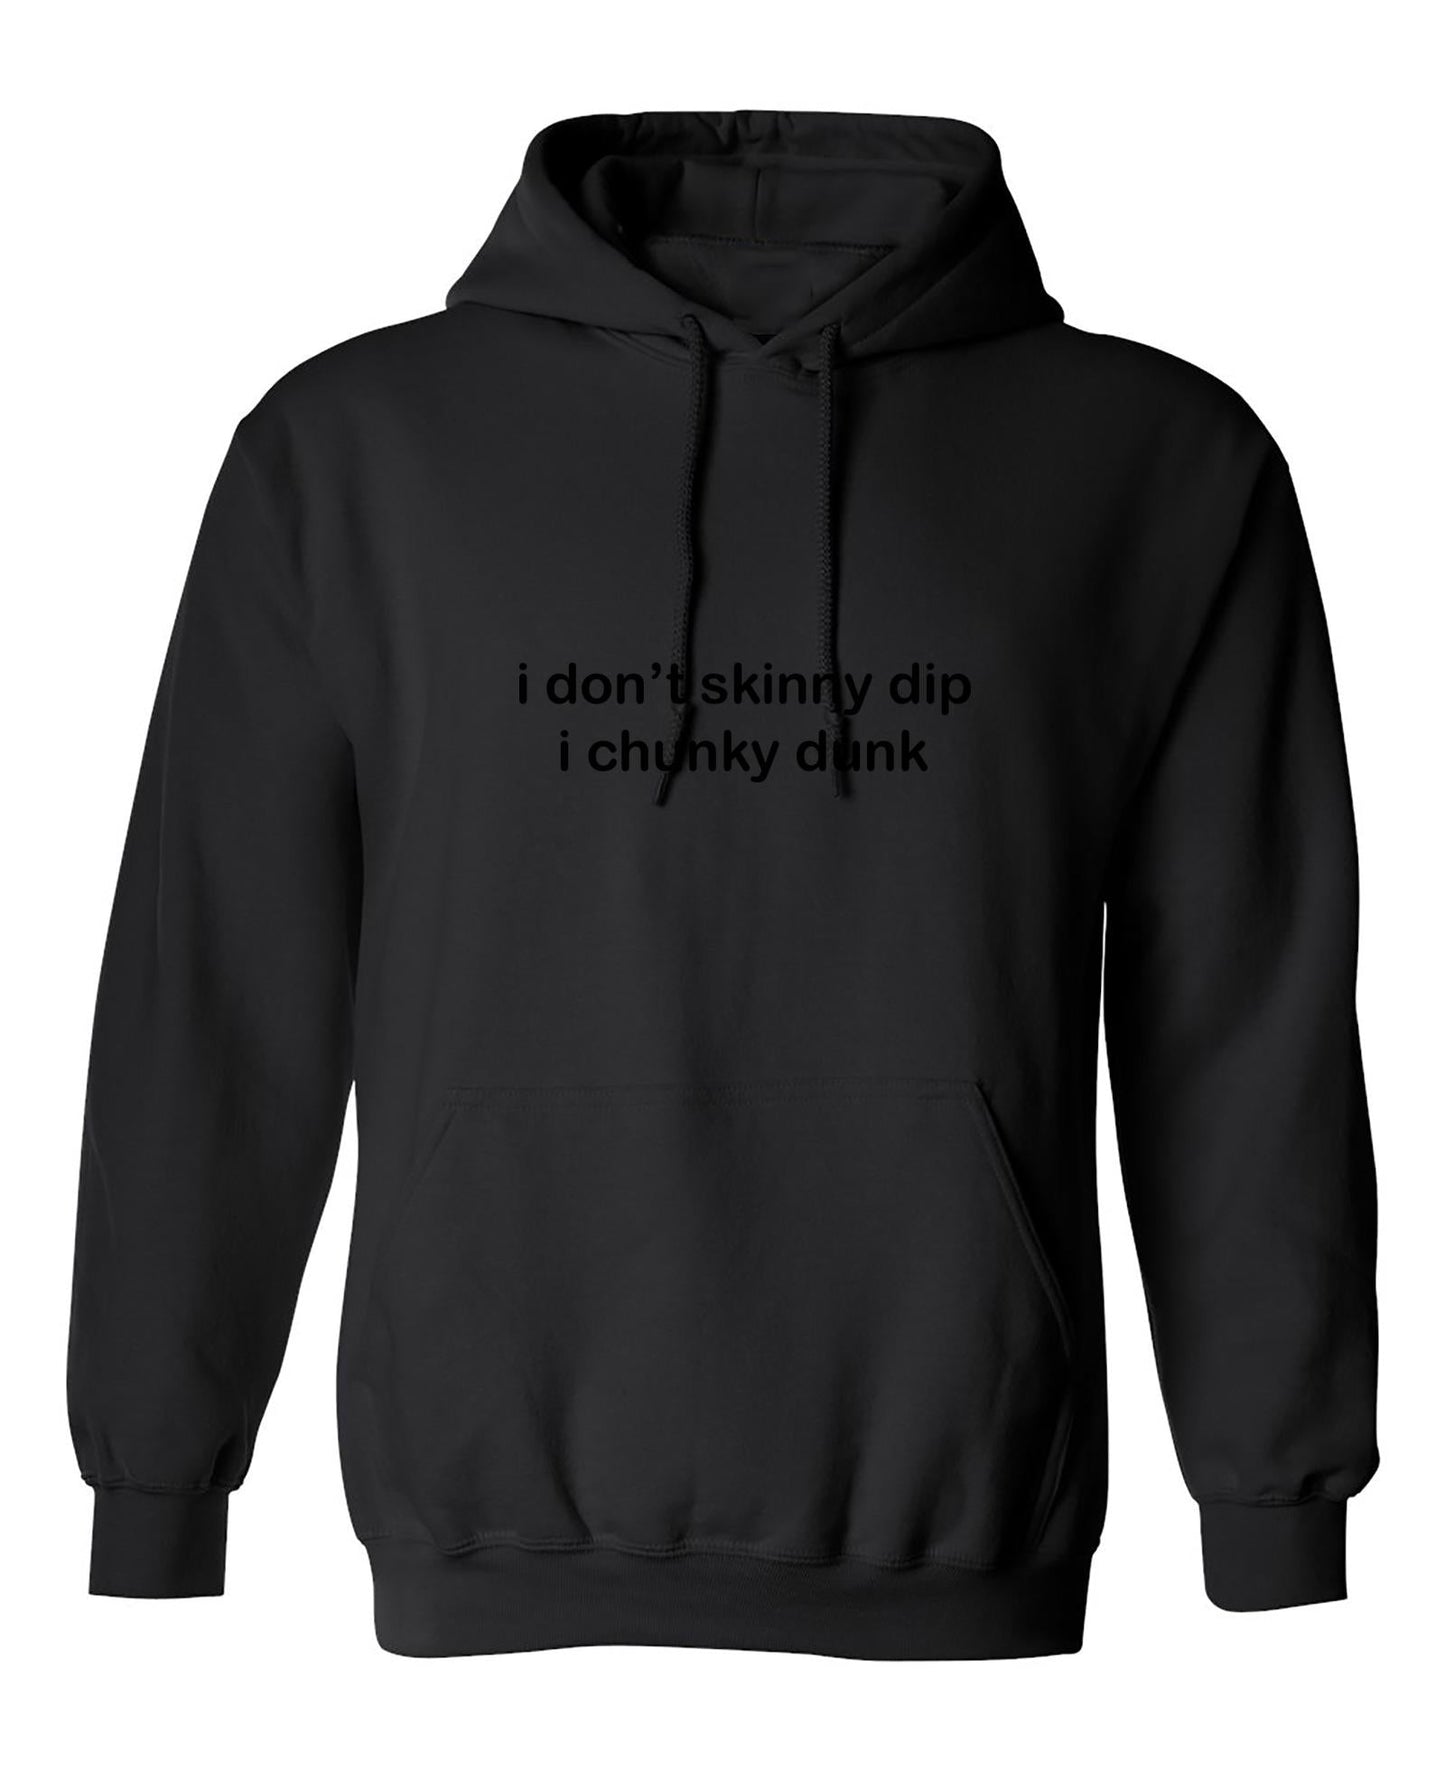 Funny T-Shirts design "I don't skinny dip i chunky dunk"